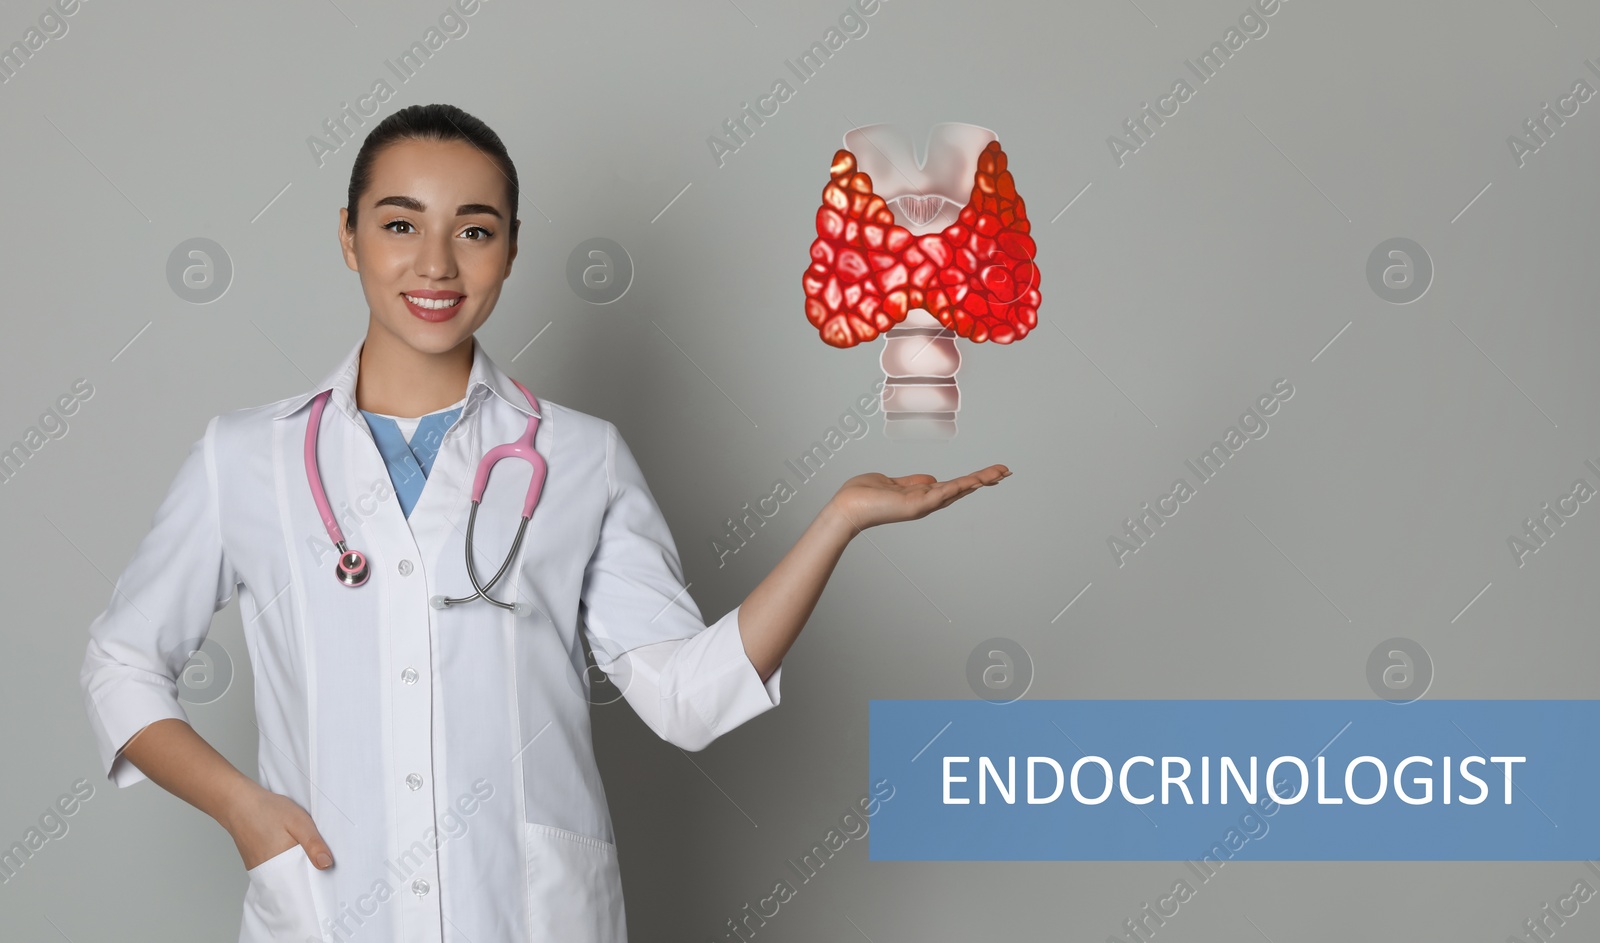 Image of Endocrinologist holding thyroid illustration on grey background, banner design